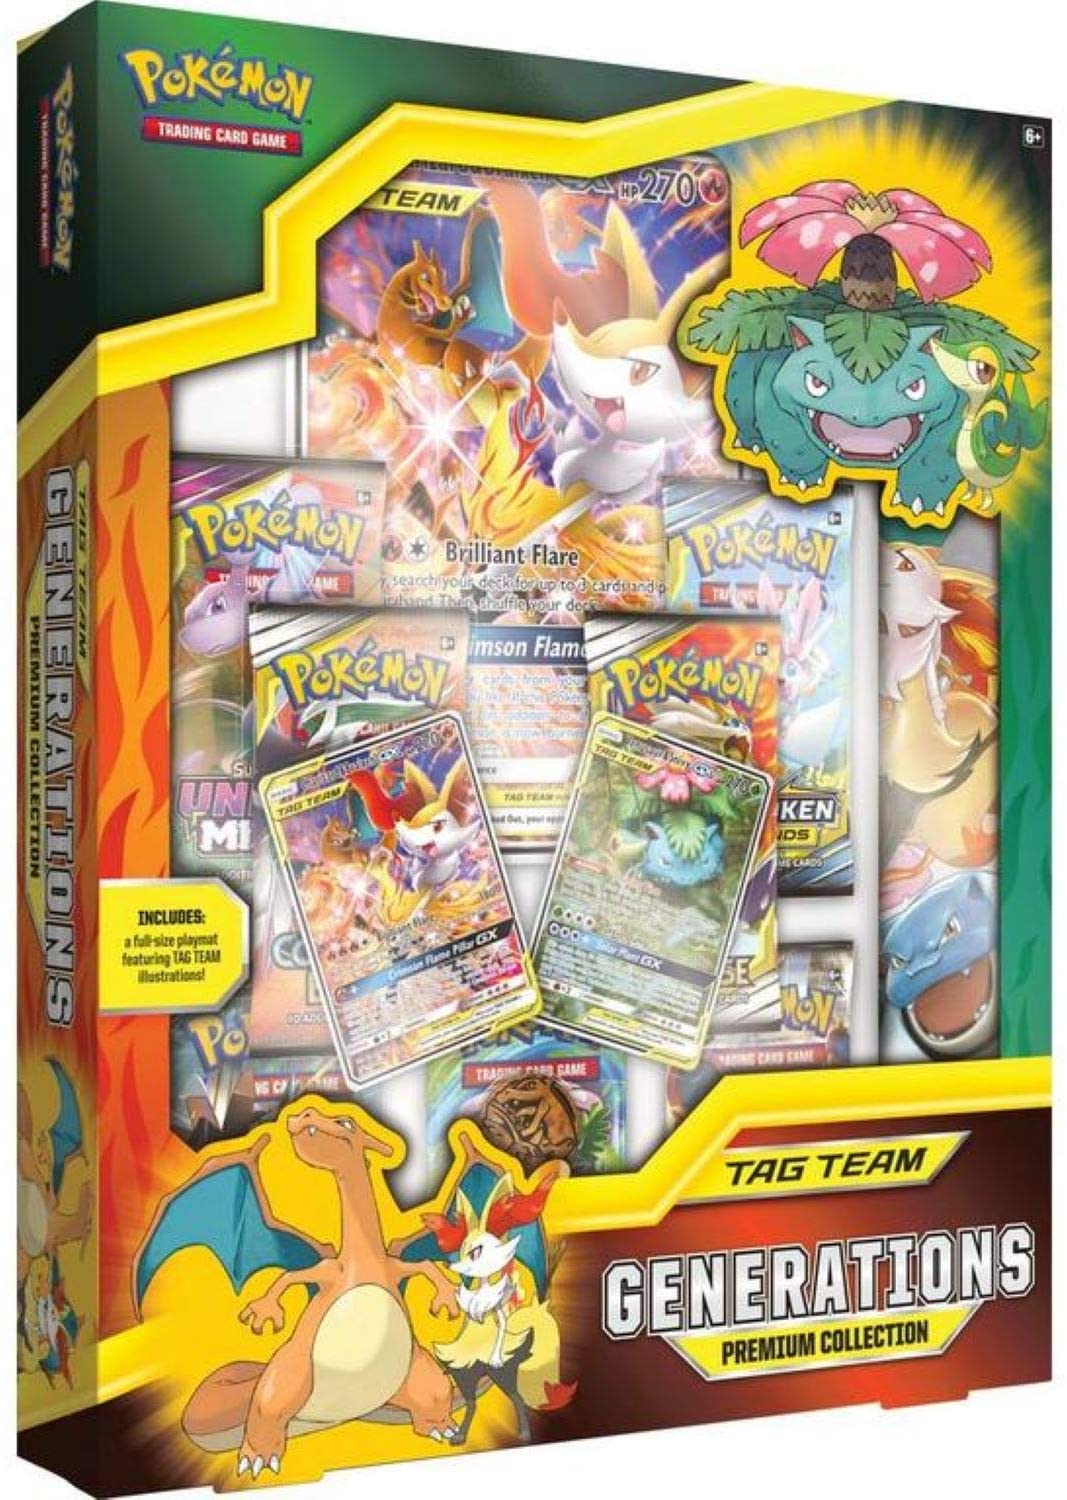 TAG Team Generations Premium Collection Box - PokeRand